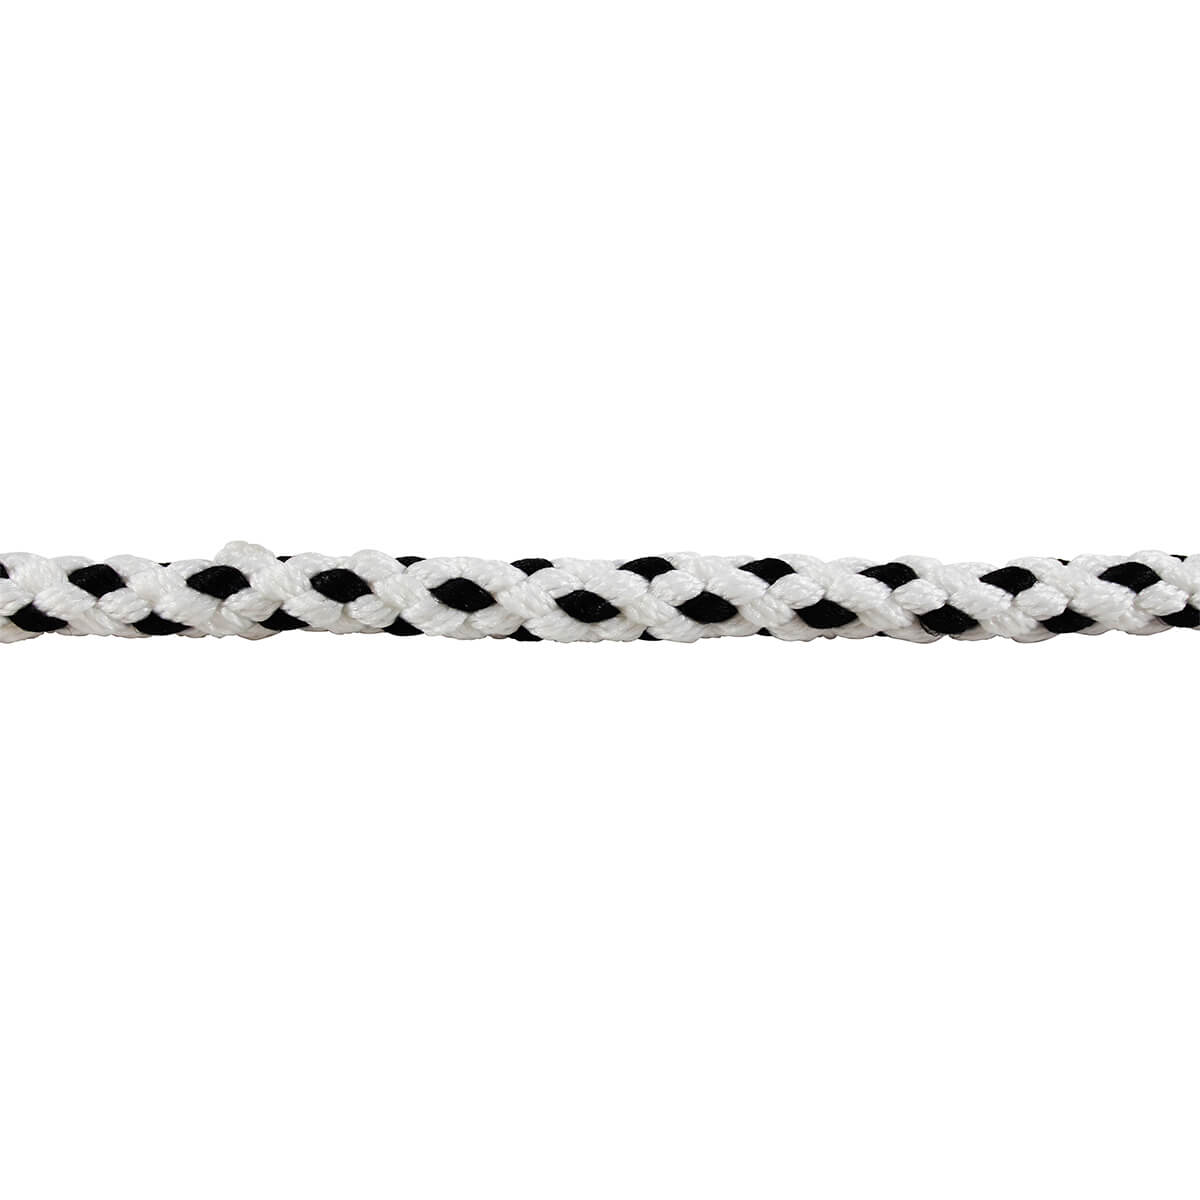 Nylon/Polyester Braided Rope - Black/White - 1/2-in - Price Per ft